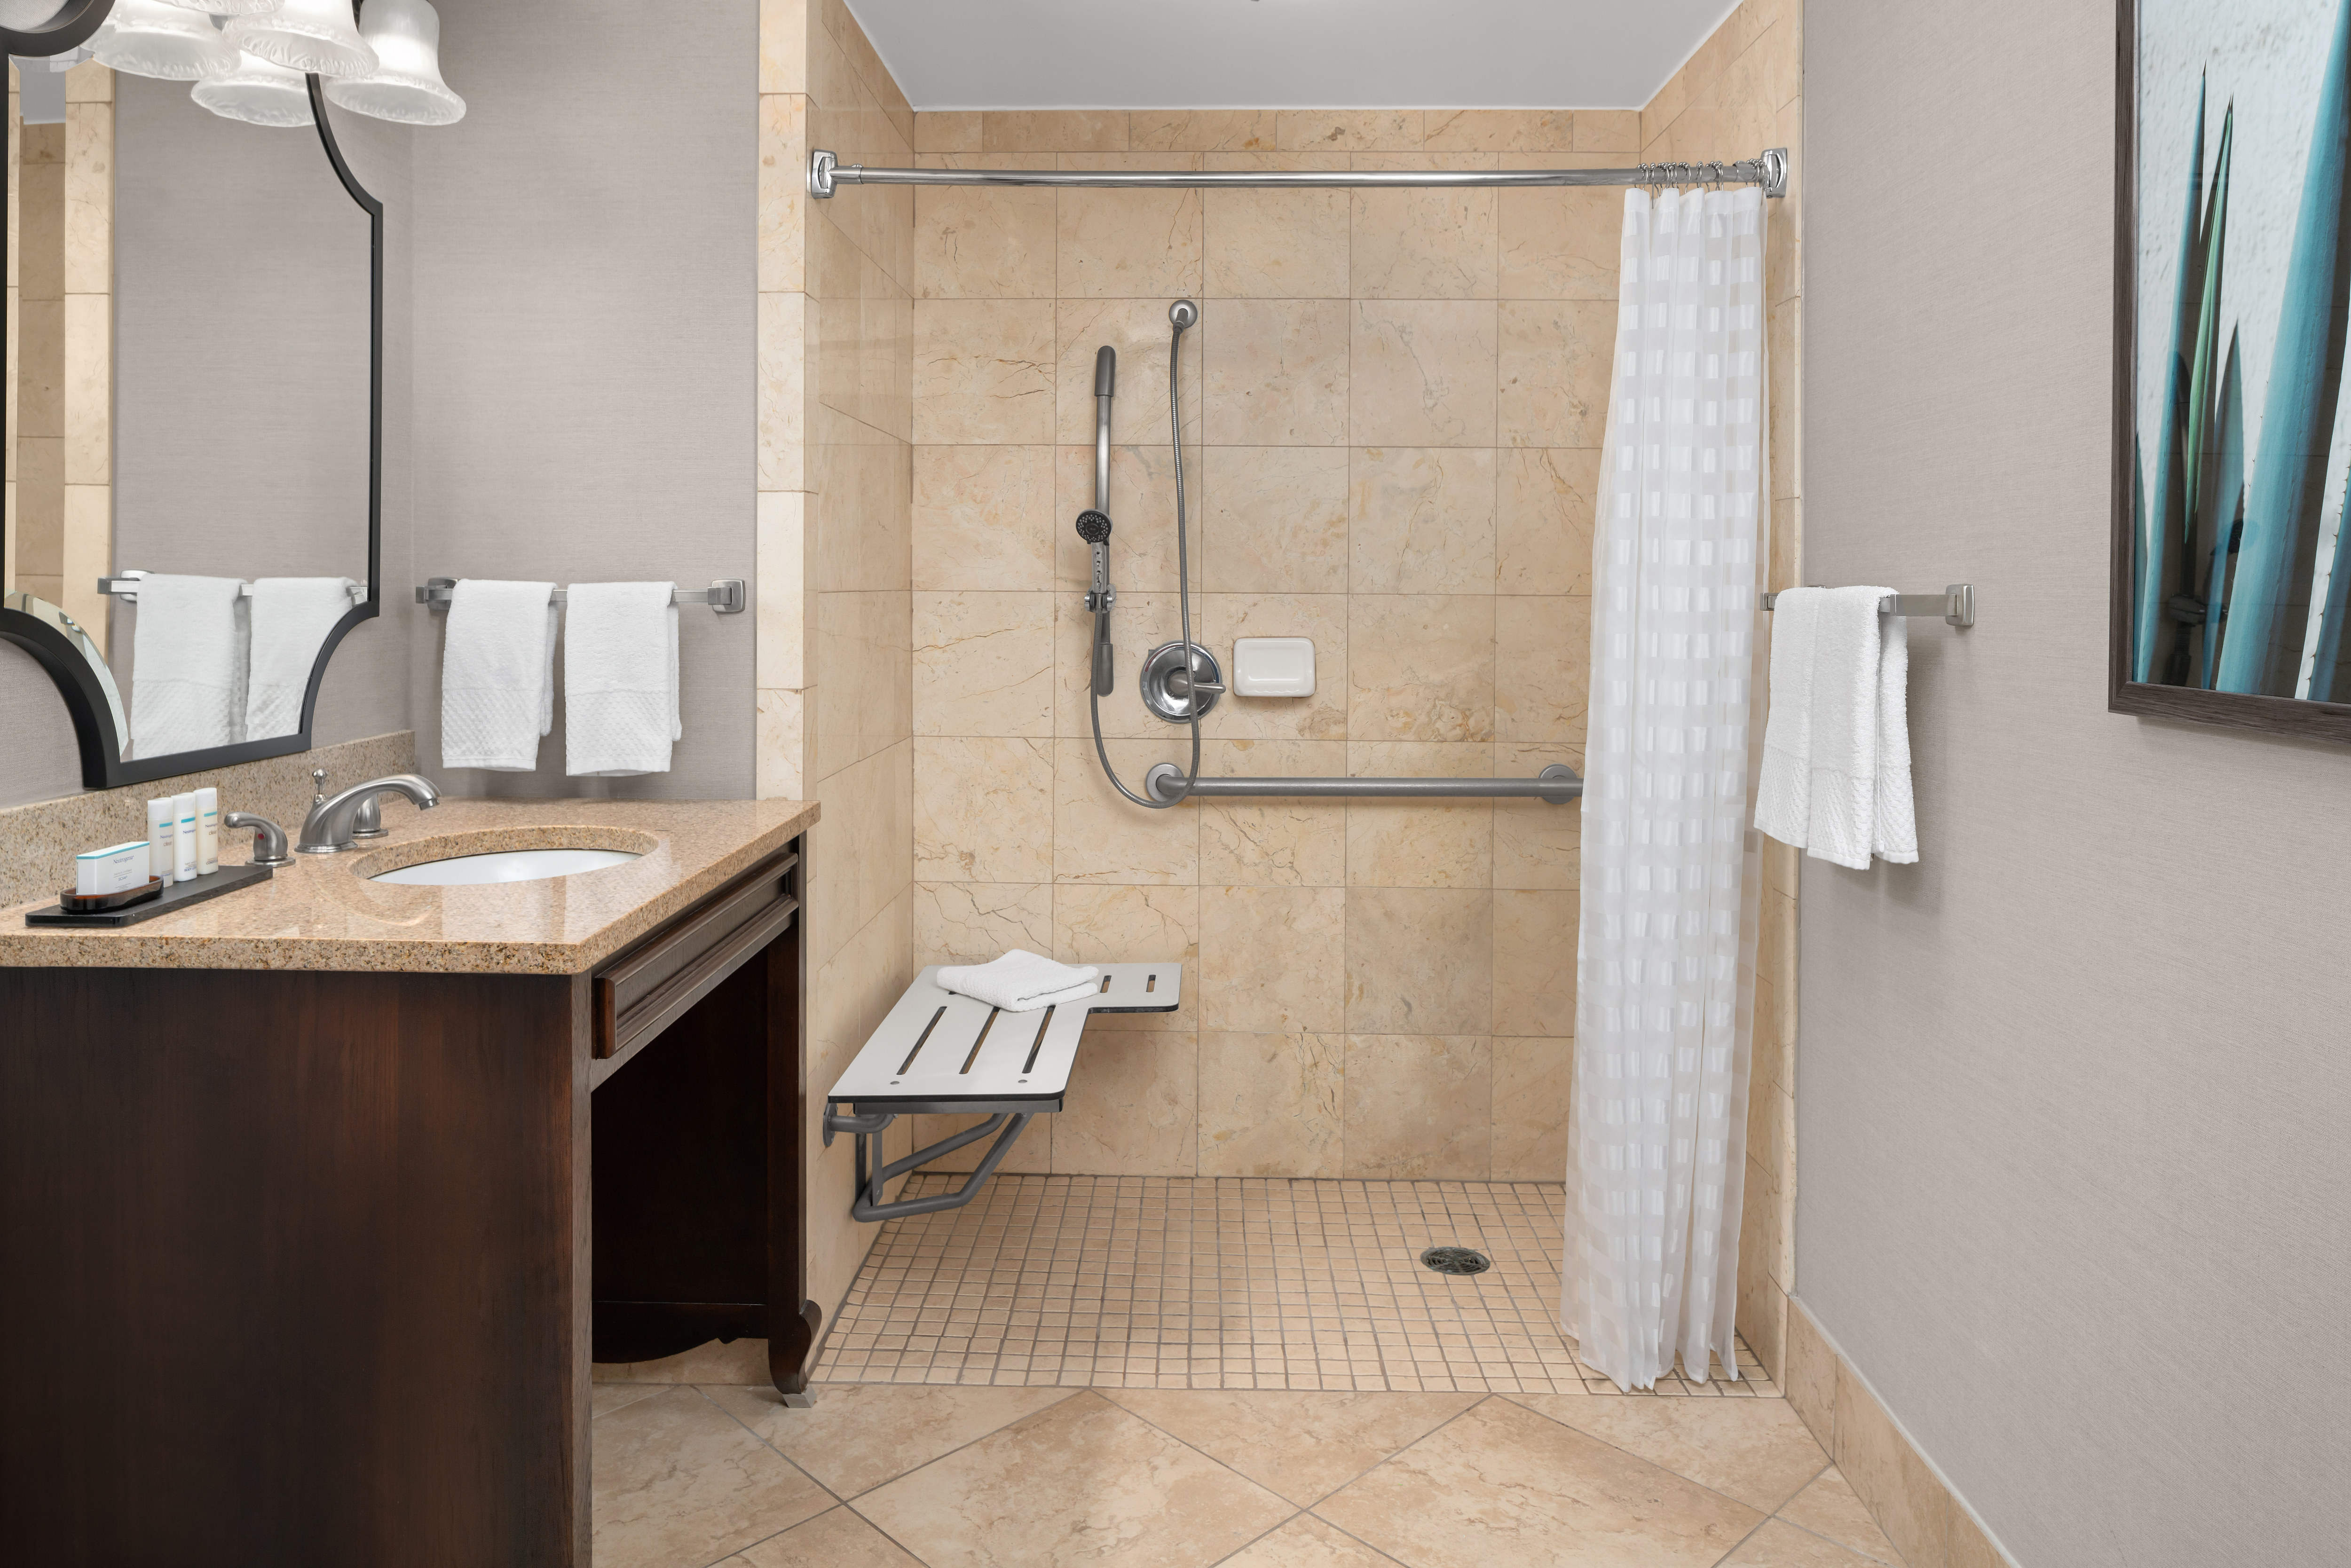 ADA shower and bathroom